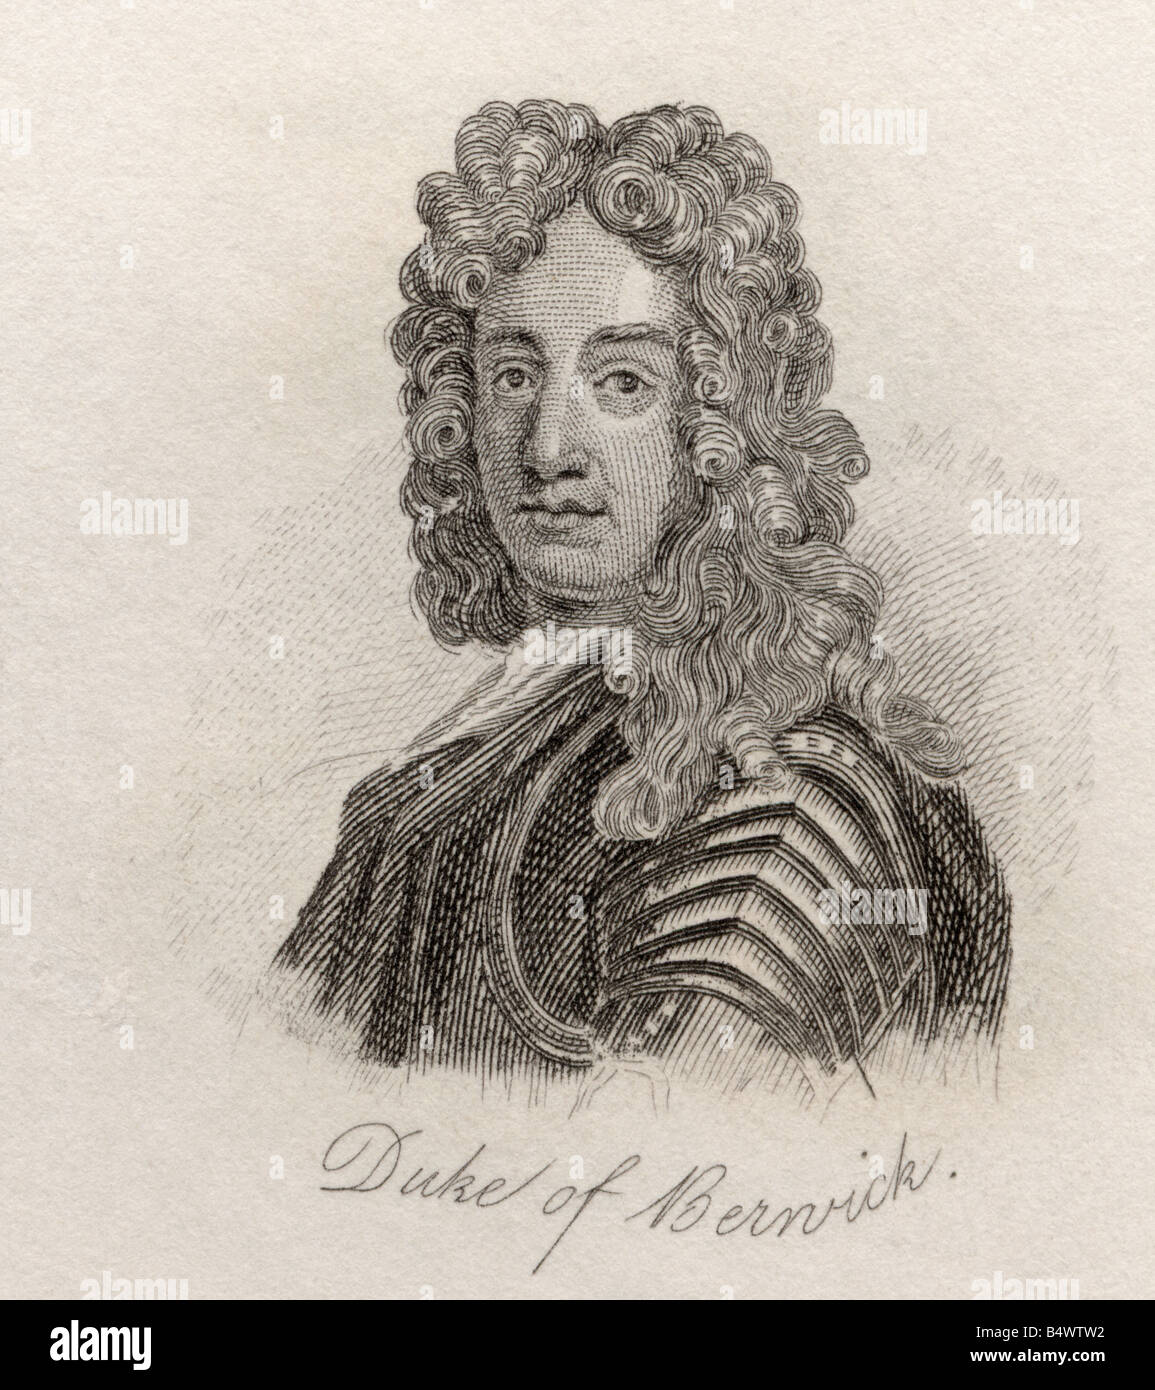 James FitzJames, 1st Duke of Berwick, 1670 - 1734.  French military leader, illegitimate son of King James II of England. Stock Photo